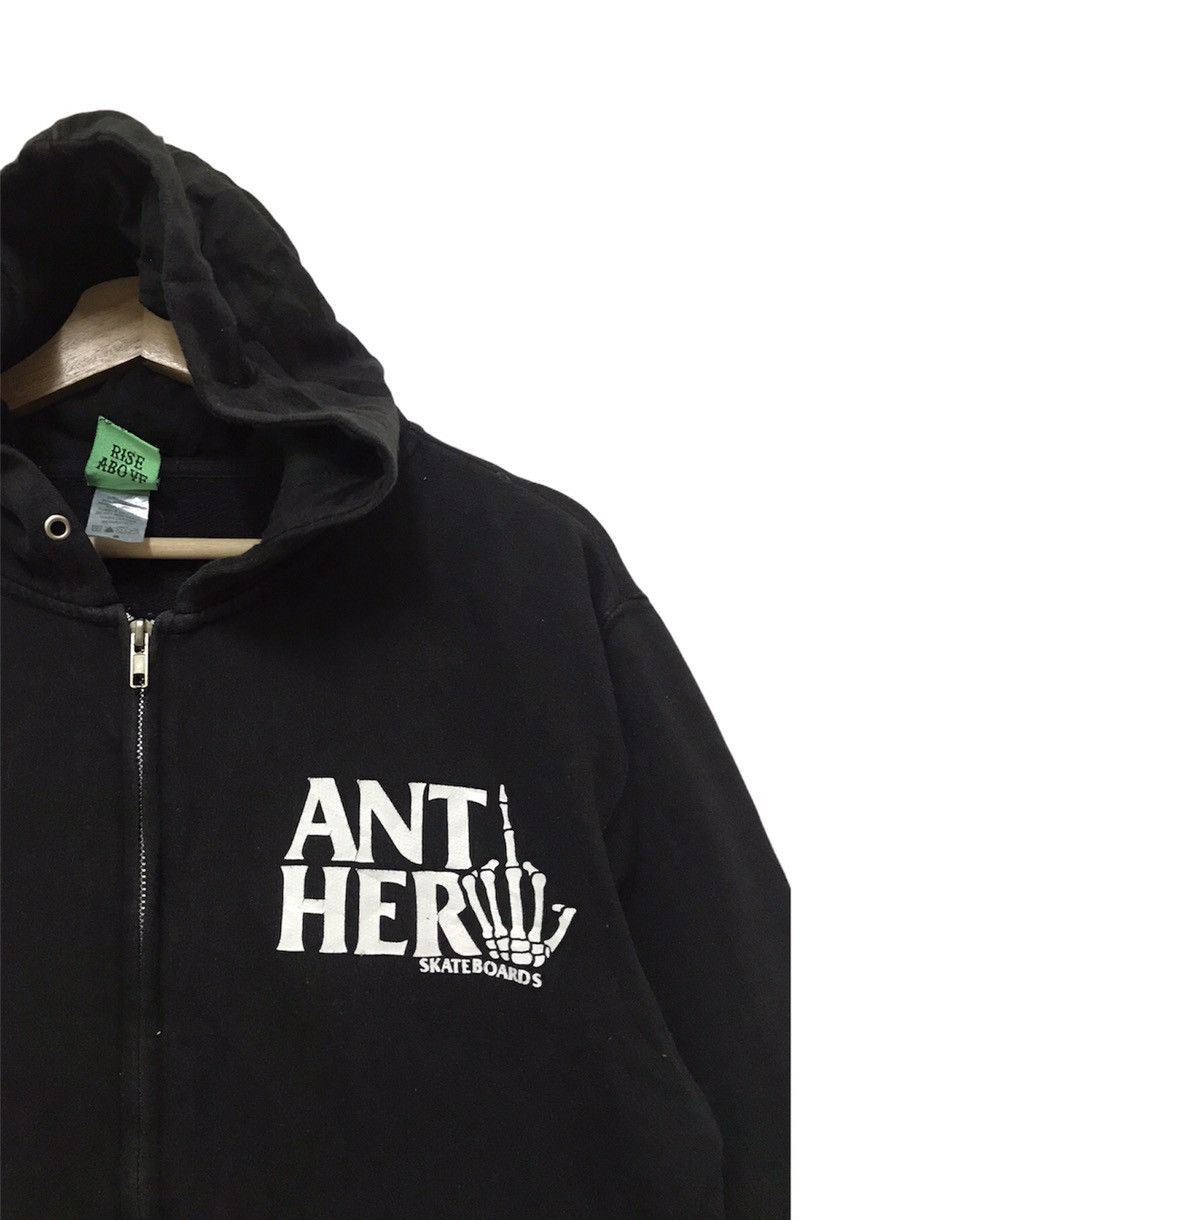 Antihero Anti Hero Hoodie Skateboard Sweatshirt Size US S / EU 44-46 / 1 - 4 Thumbnail